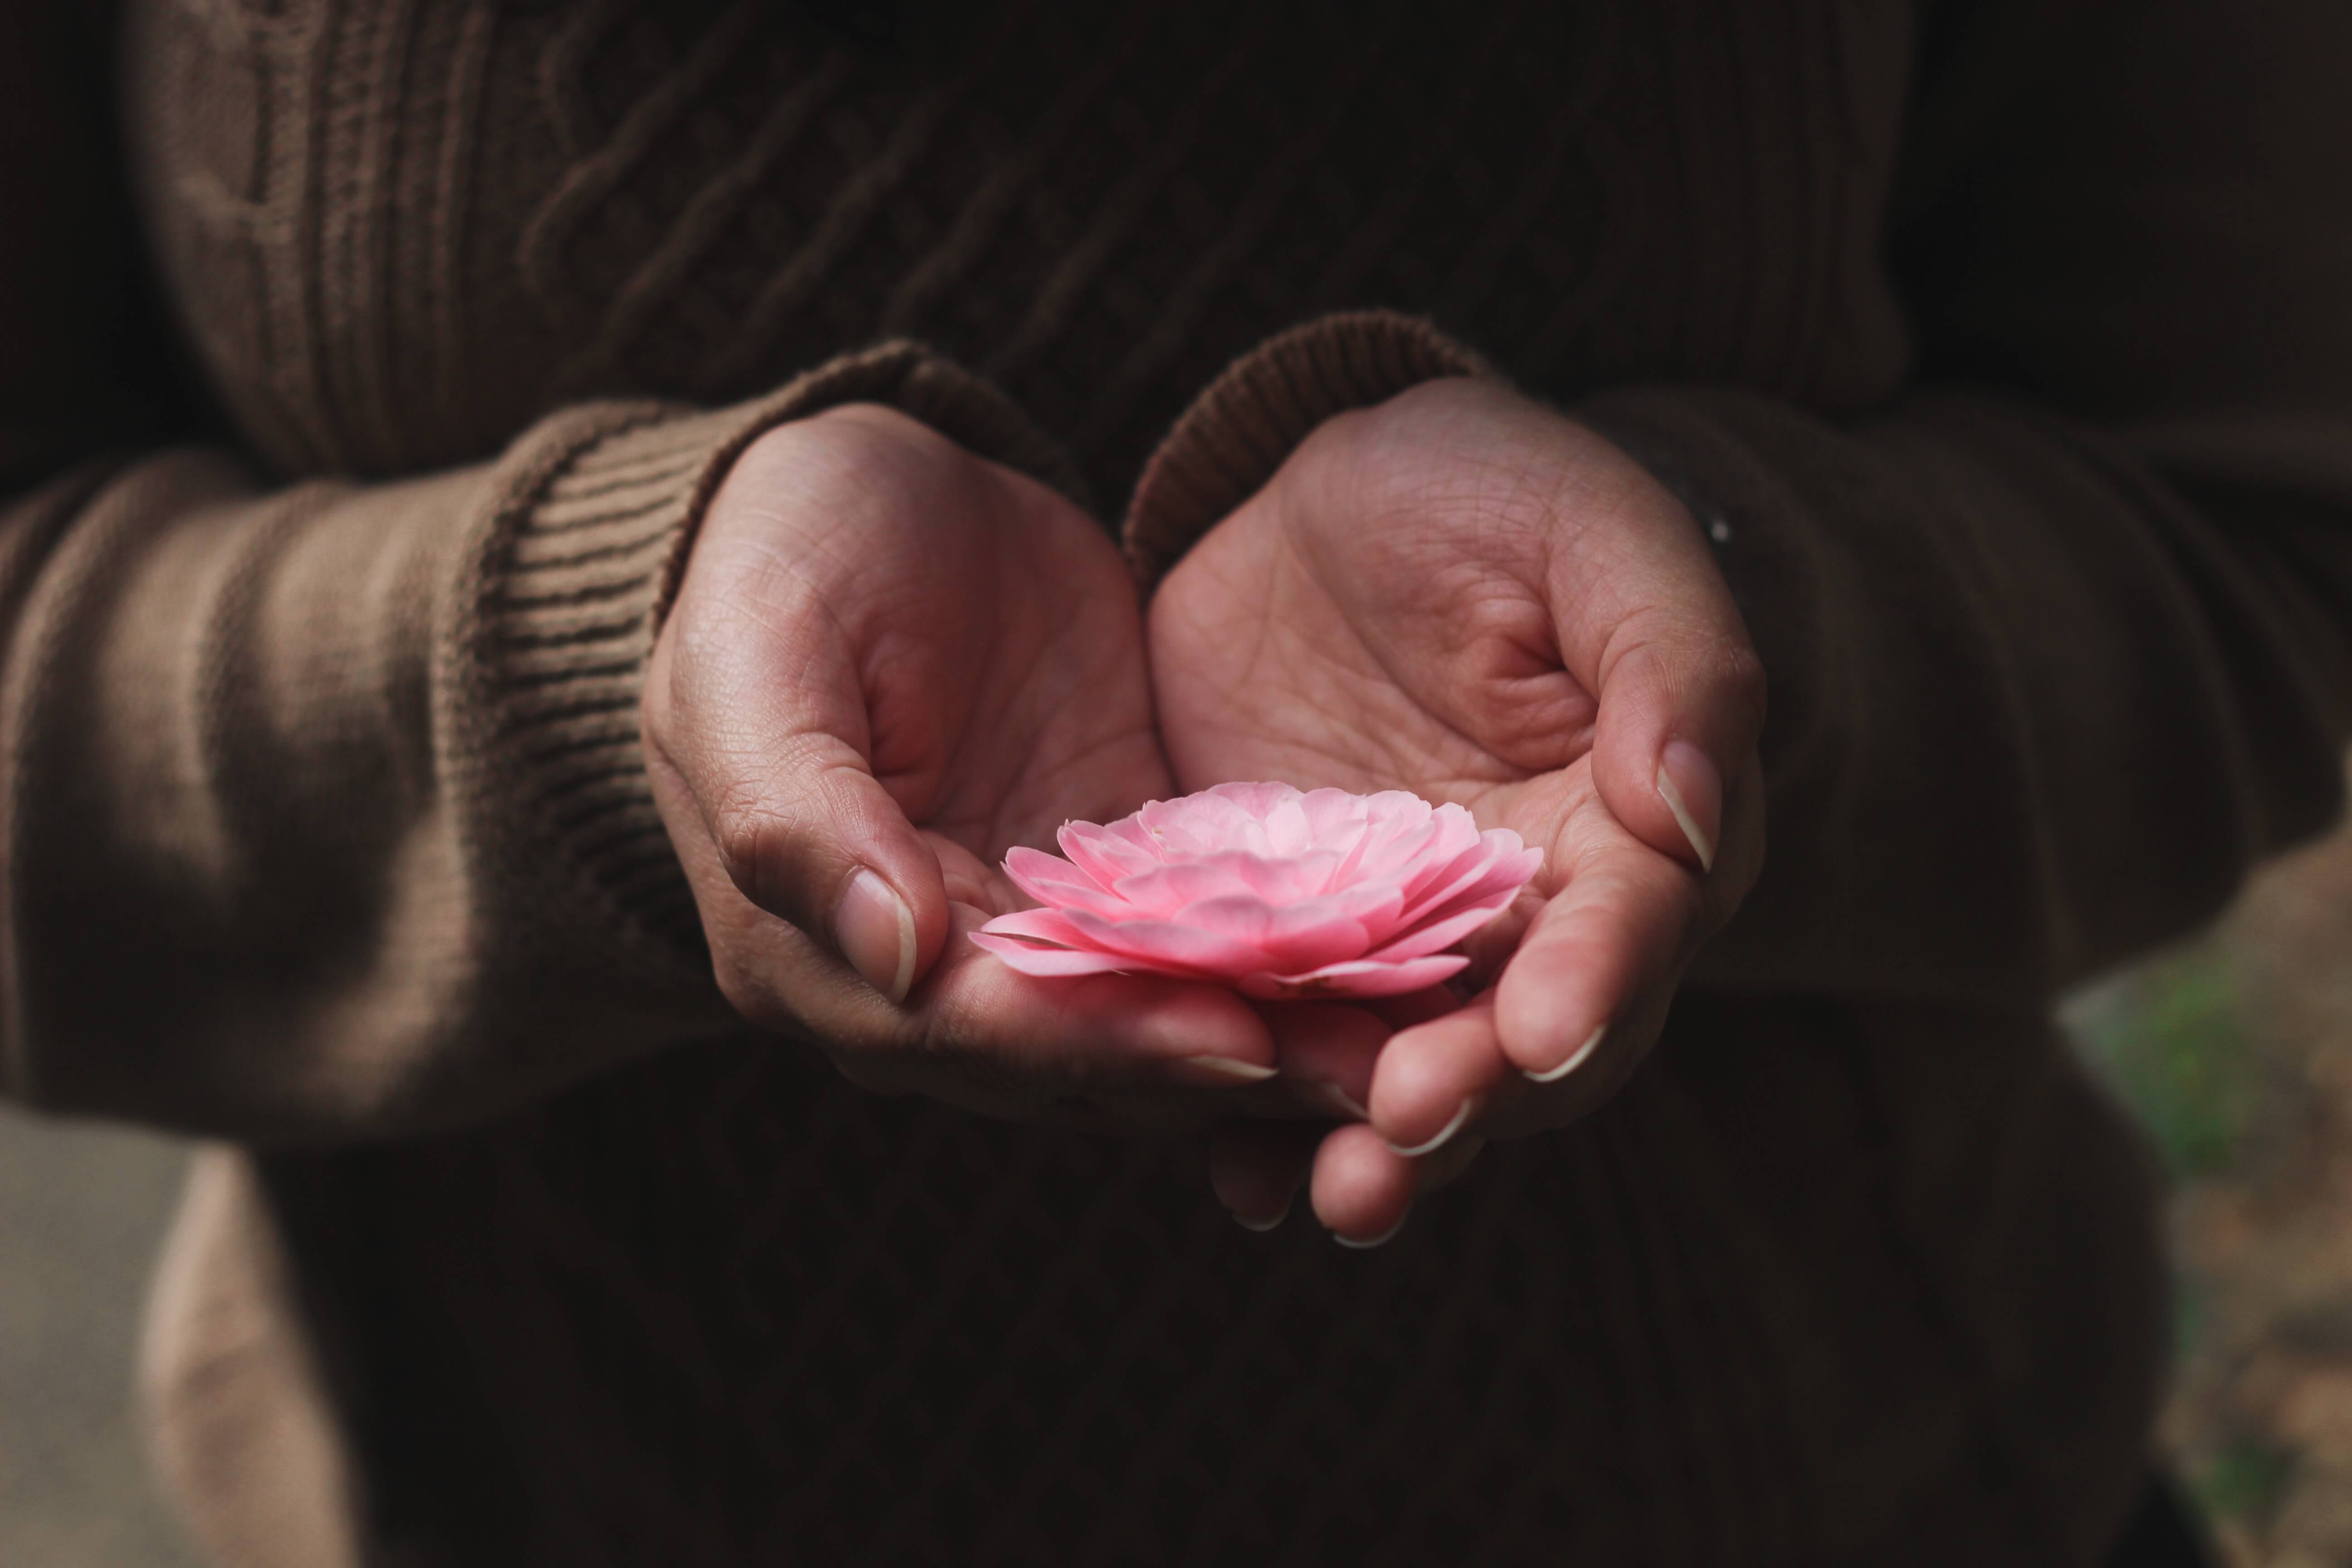 alt="pink flower held on open palms of hands"